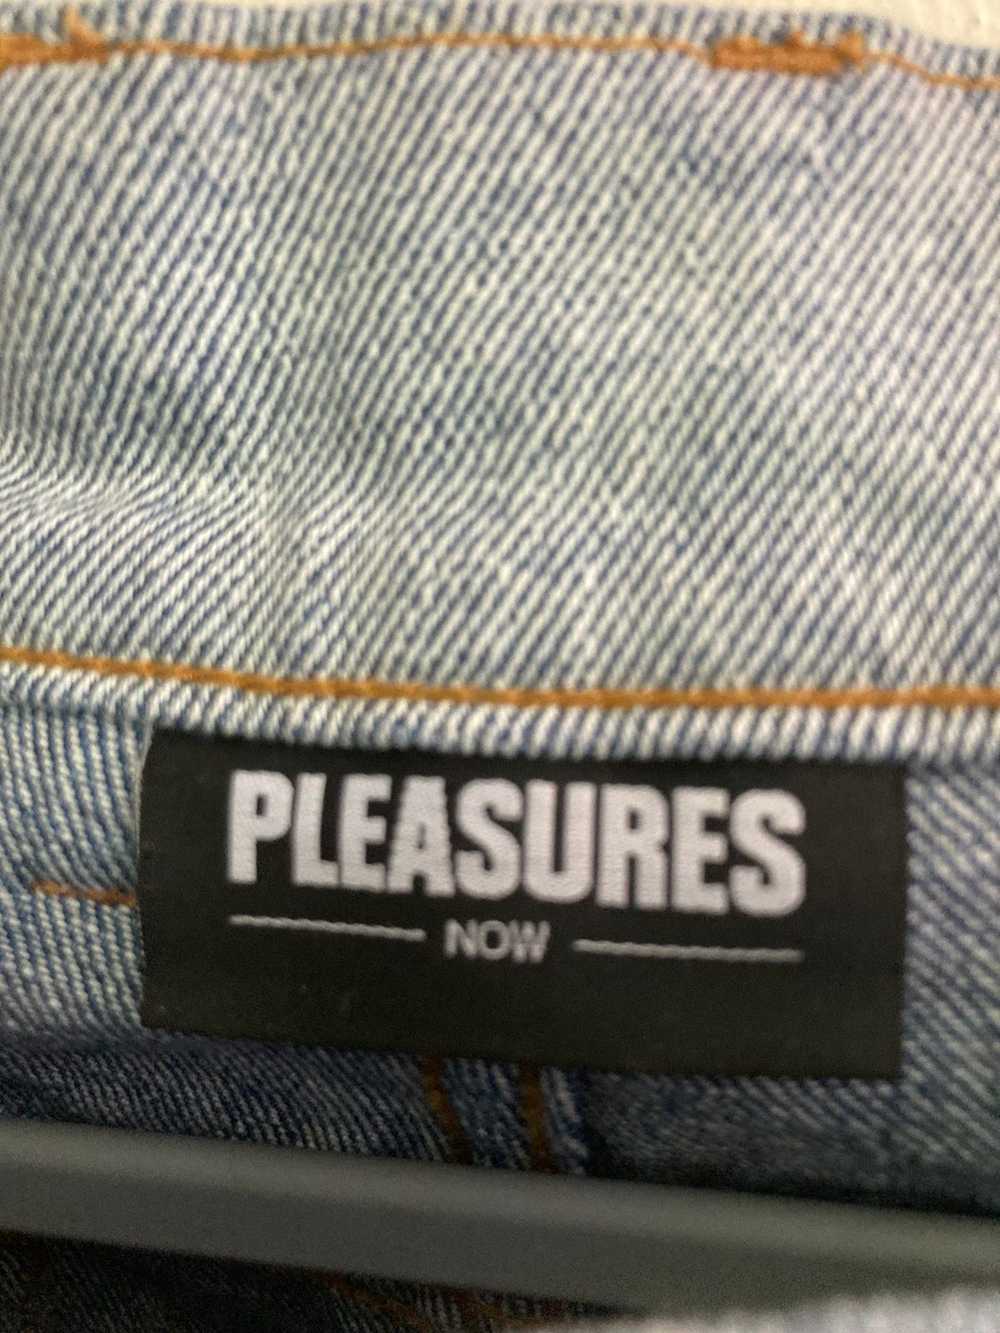 Pleasures Waterfall Jeans (under retail) - image 8